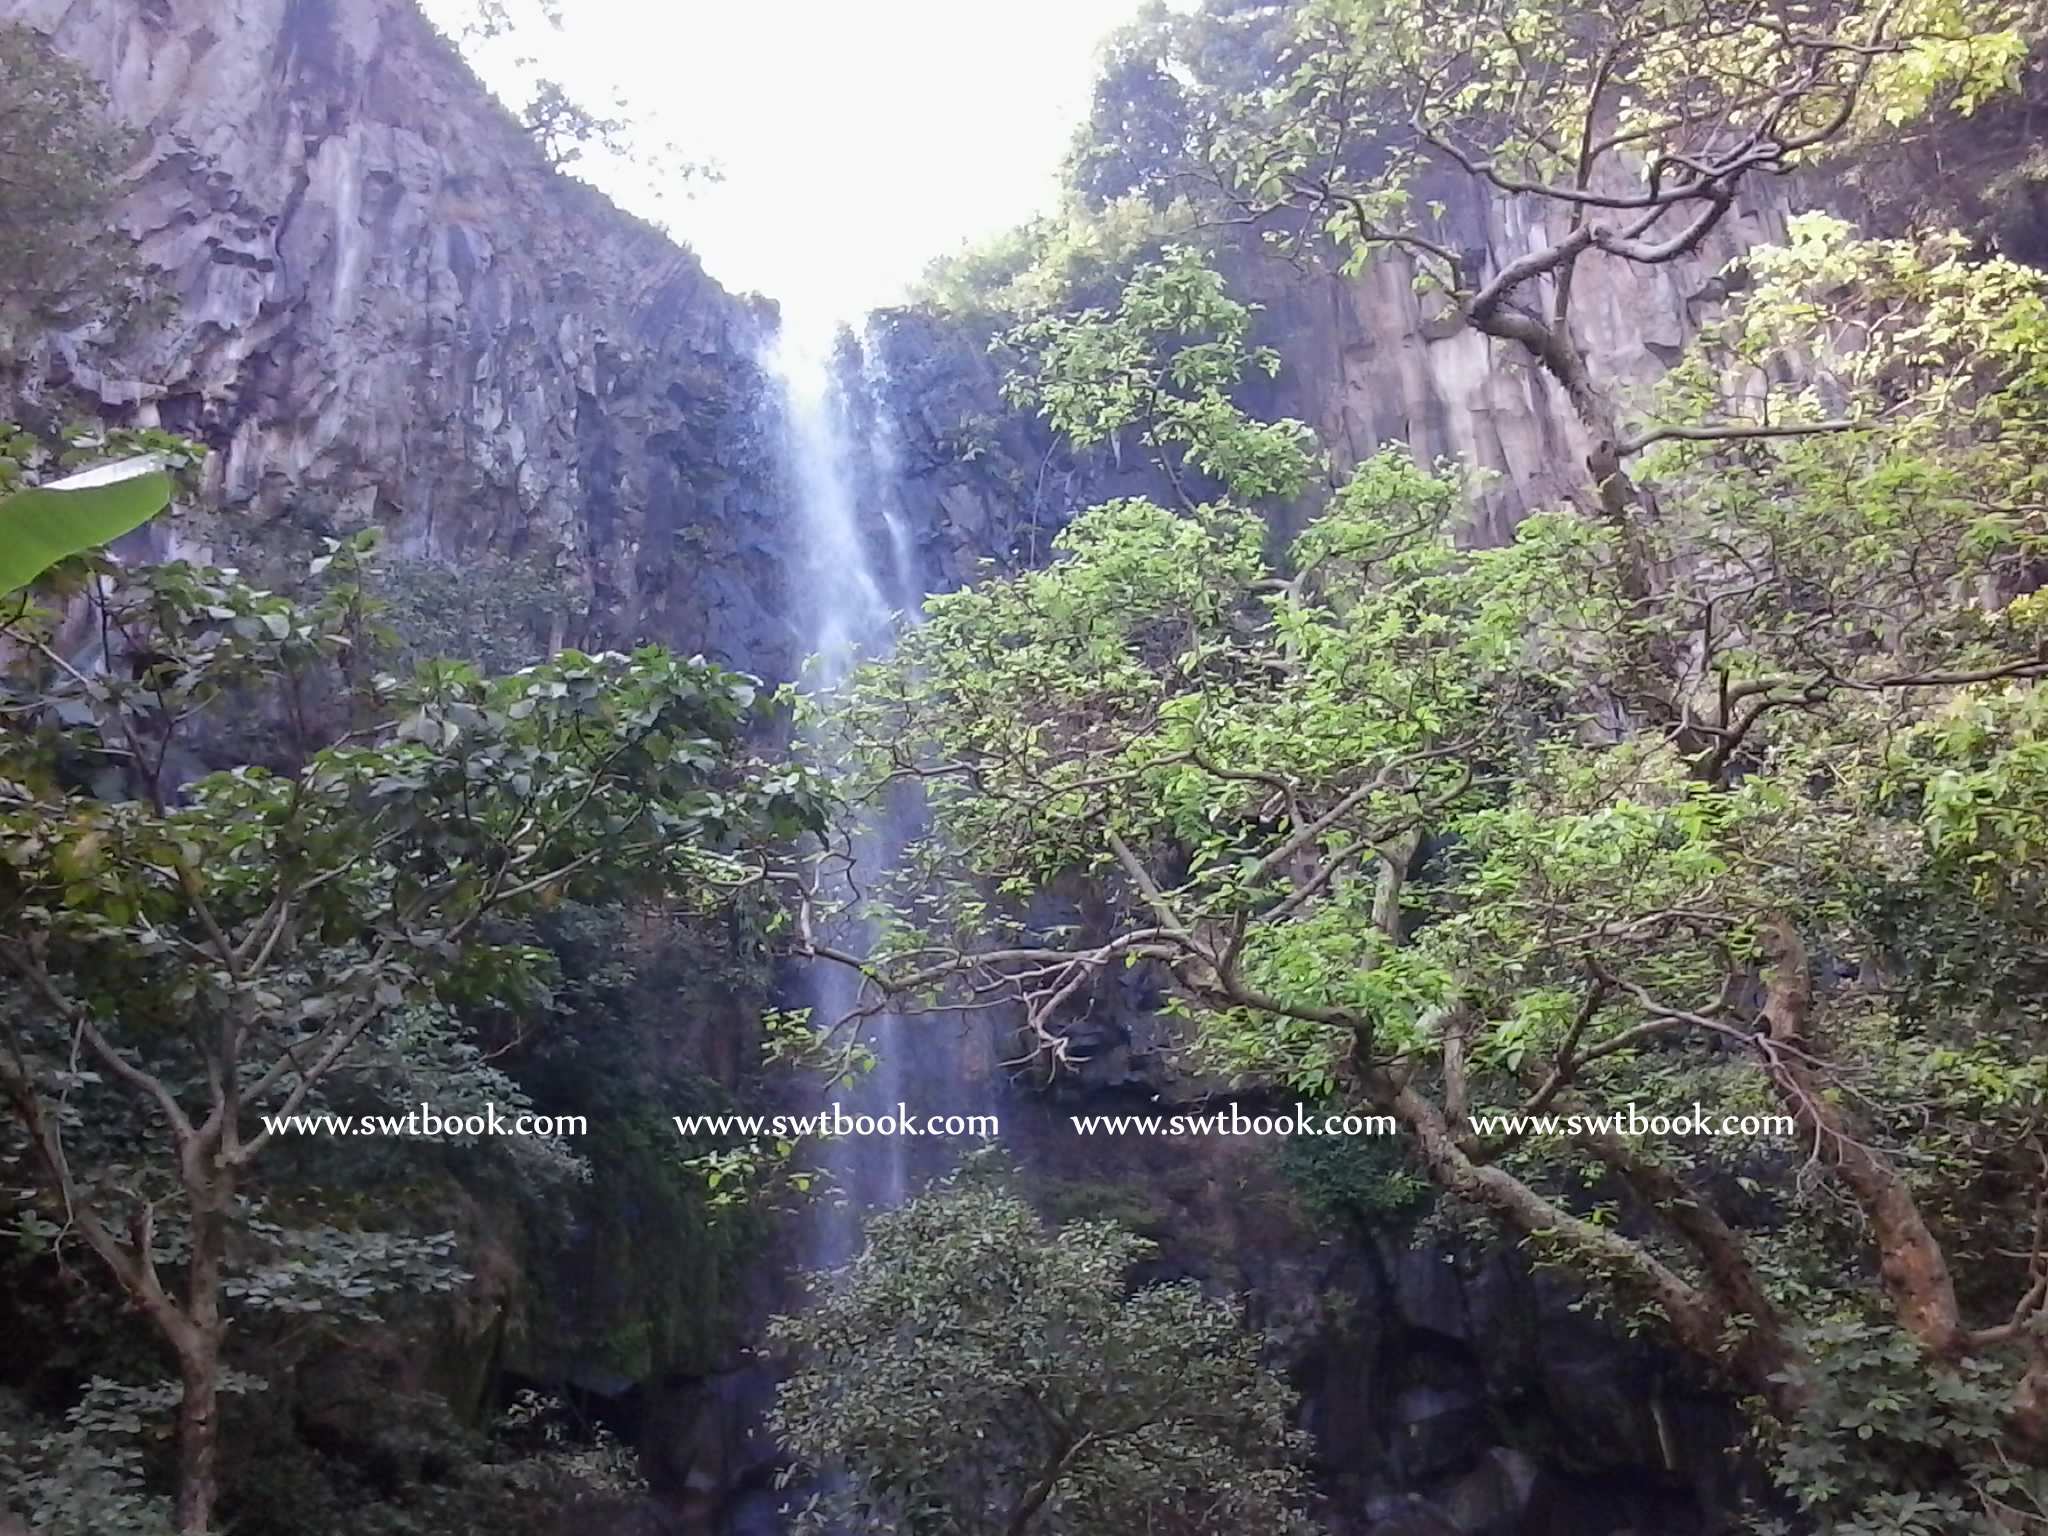 jharna壁紙hd,滝,水資源,自然の風景,自然,水